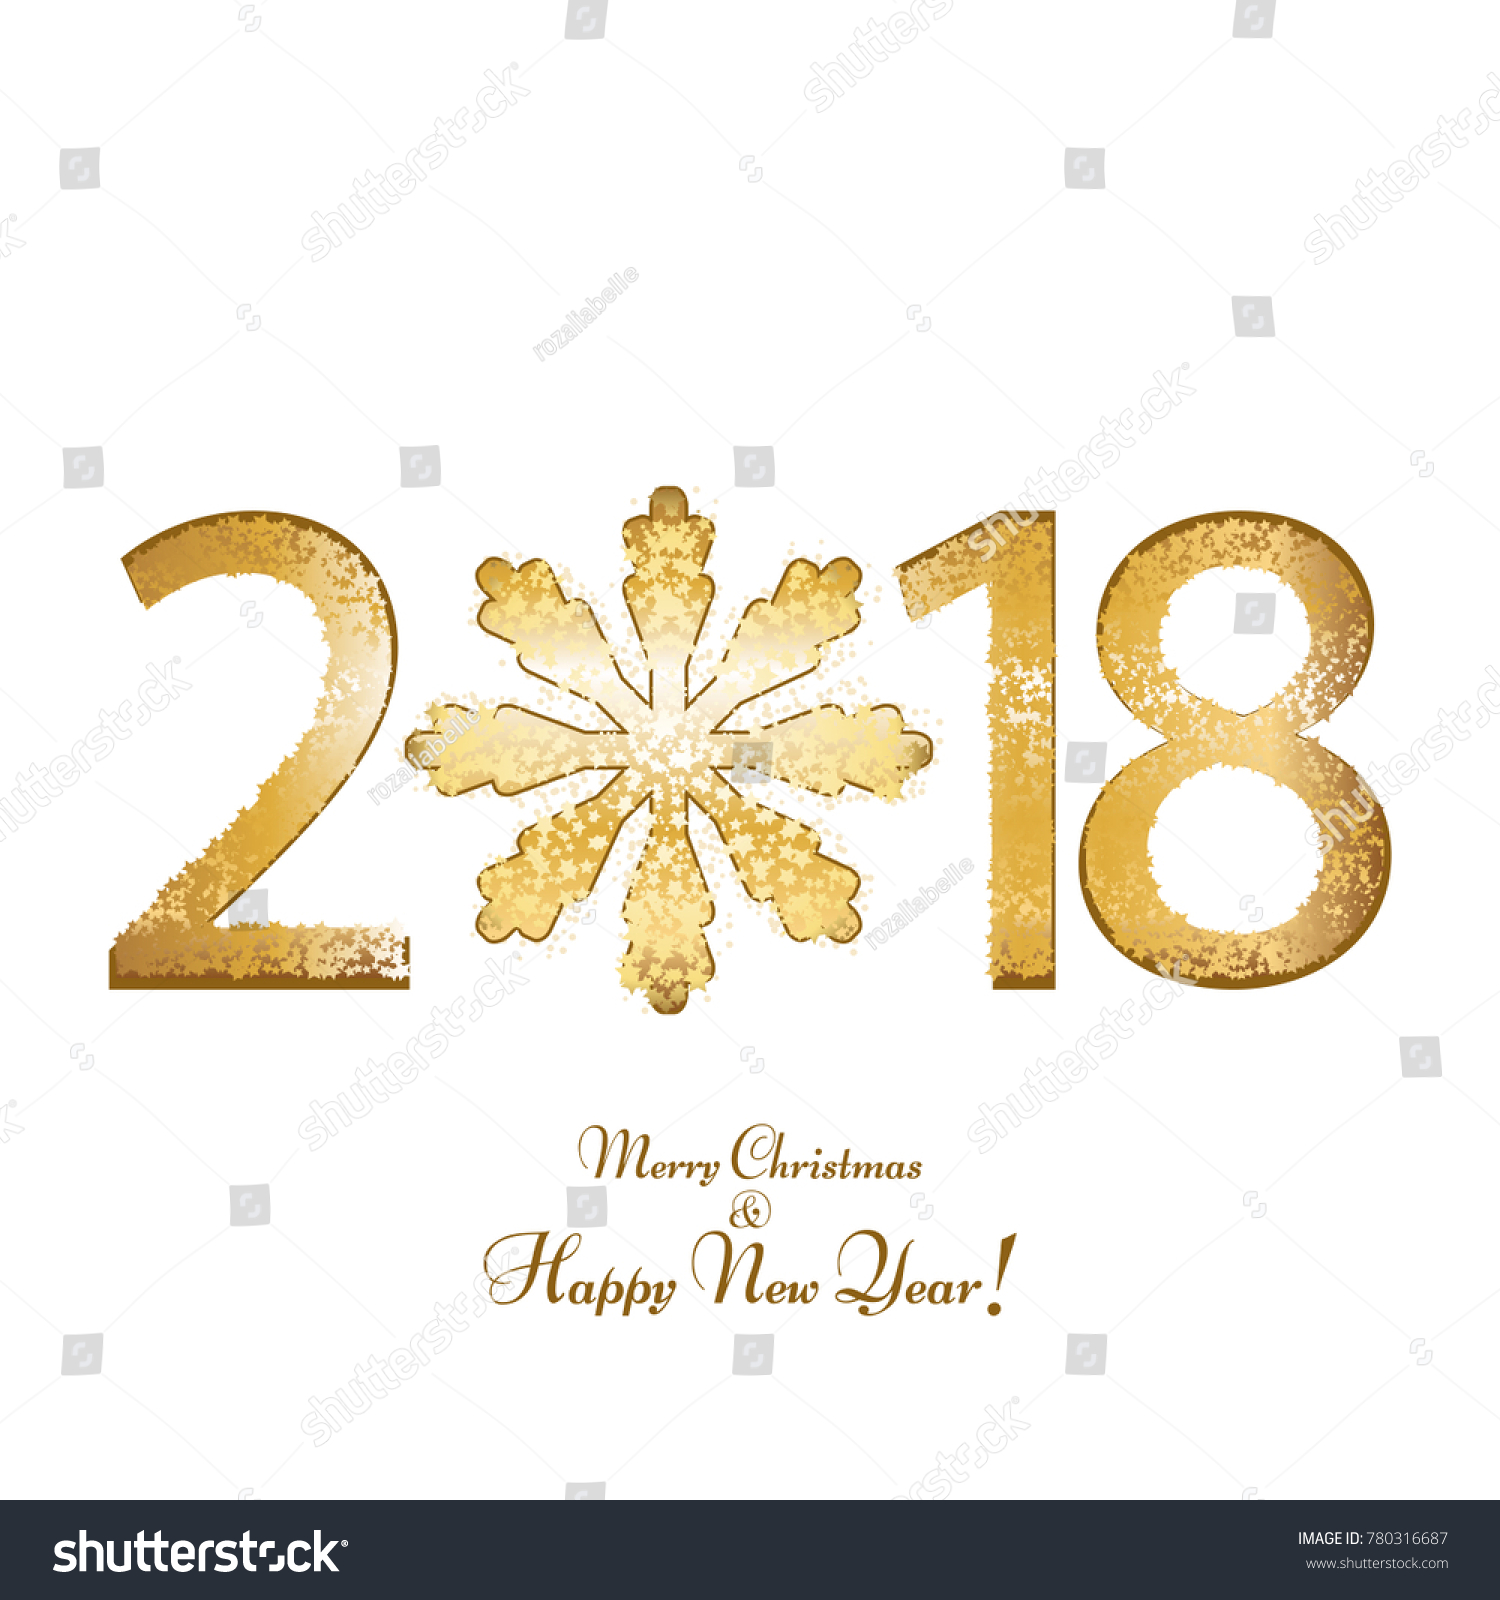 Merry Christmas Happy New Year 2018 Stock Vector 780316687 - Shutterstock